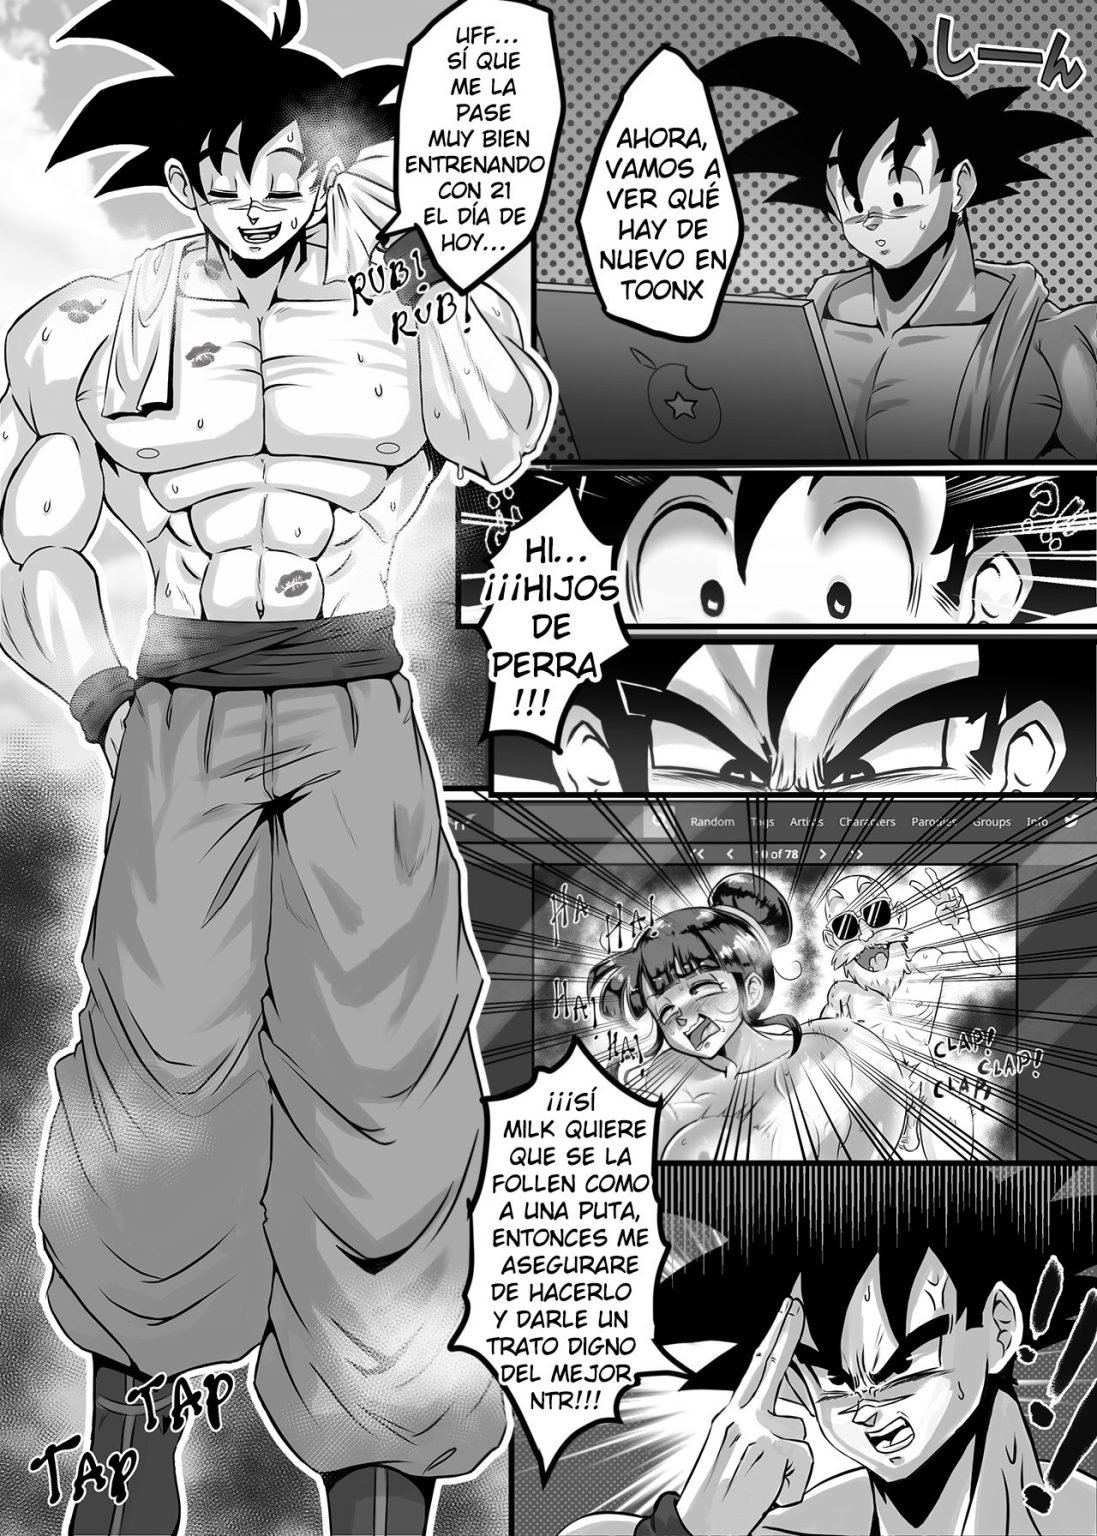 Dbz Porn Hot Milk - Goku x chichi/milk after dragonball tale (6 pictures) - Shooshtime